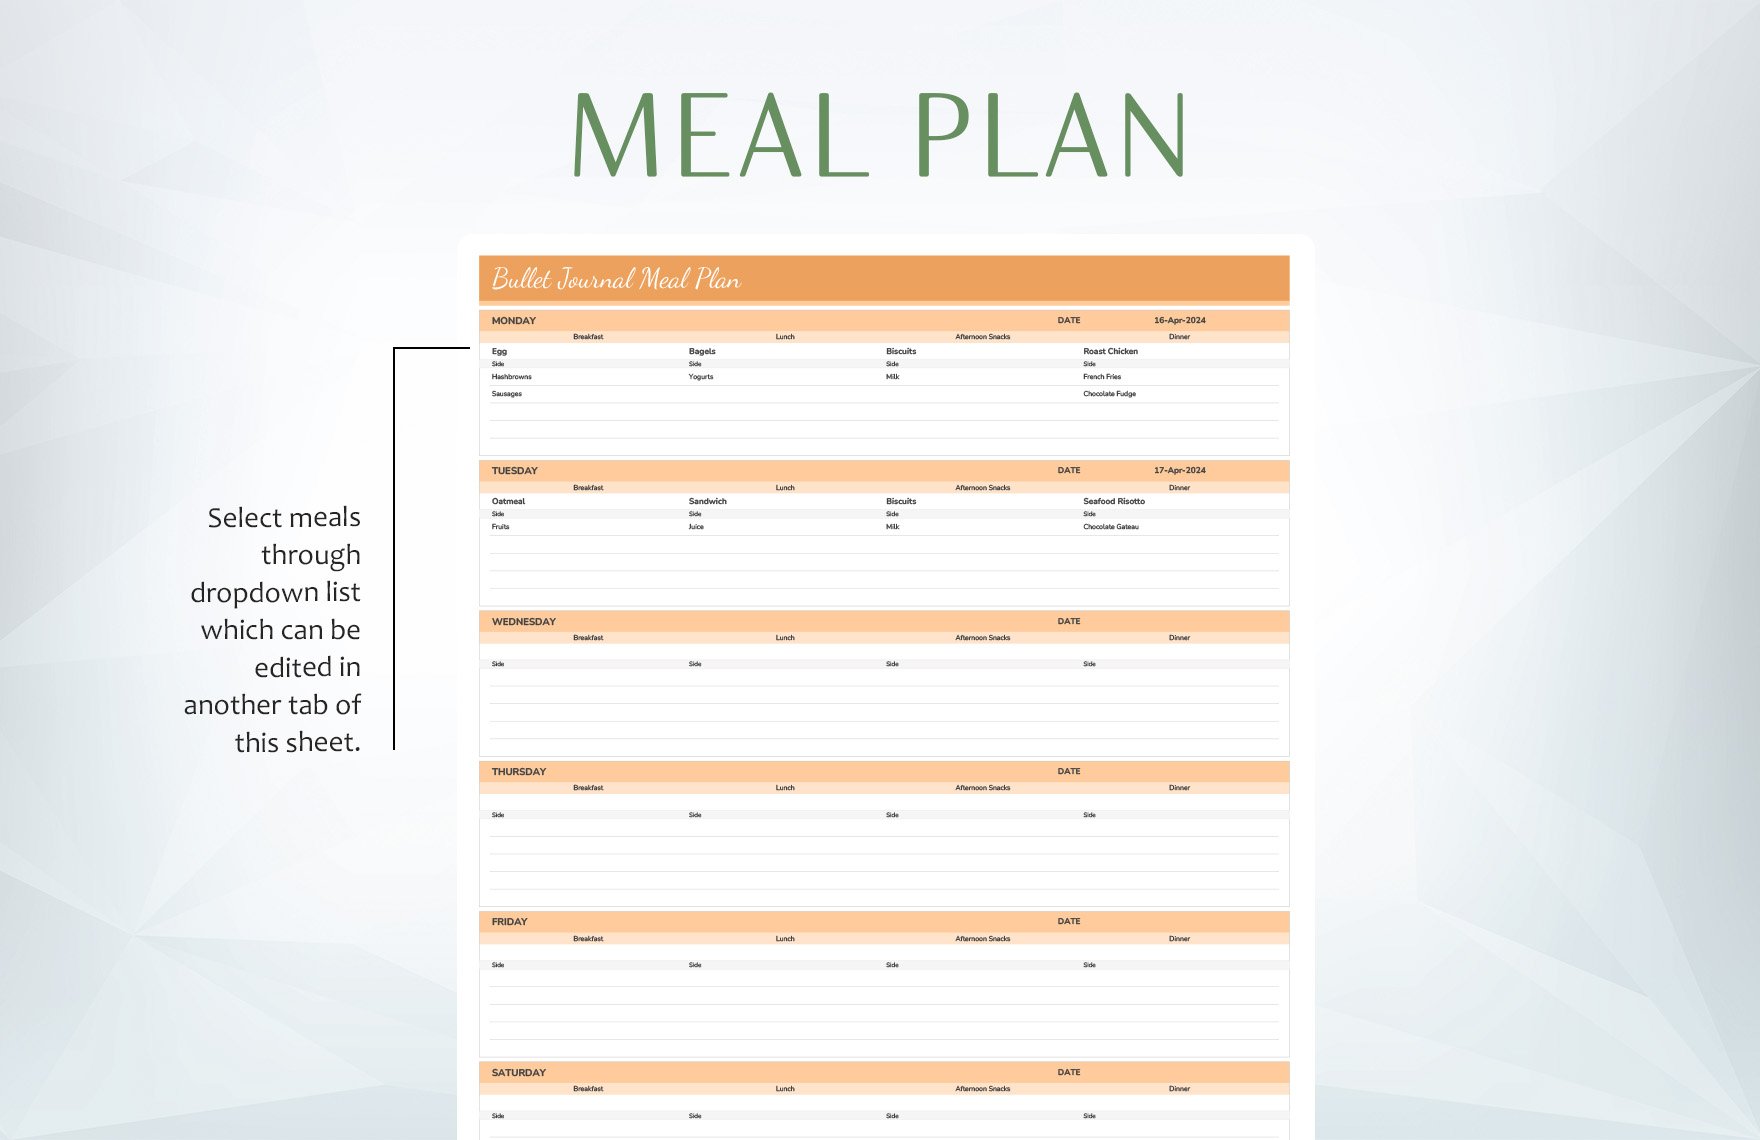 Bullet Journal Meal Plan Template